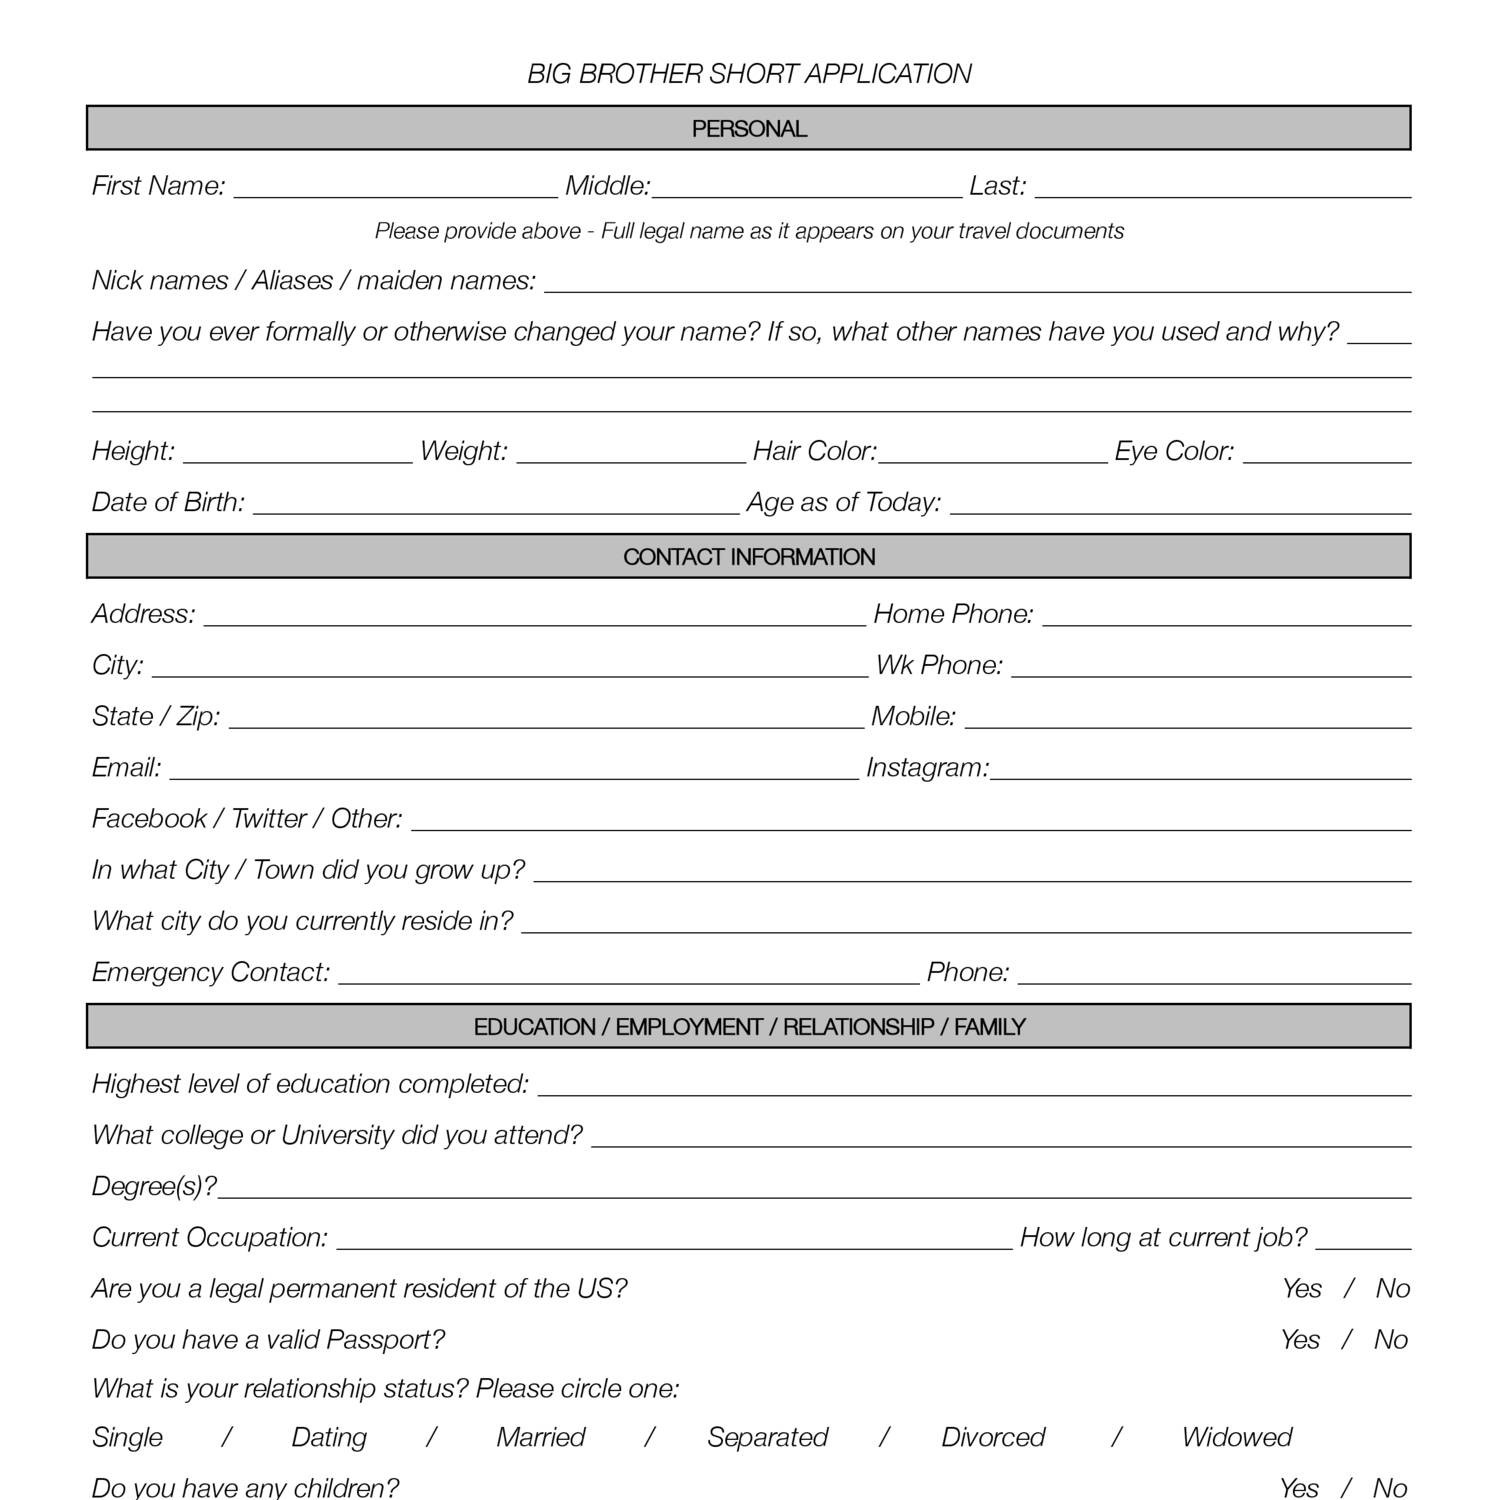 Big Brother Casting Application.pdf DocDroid